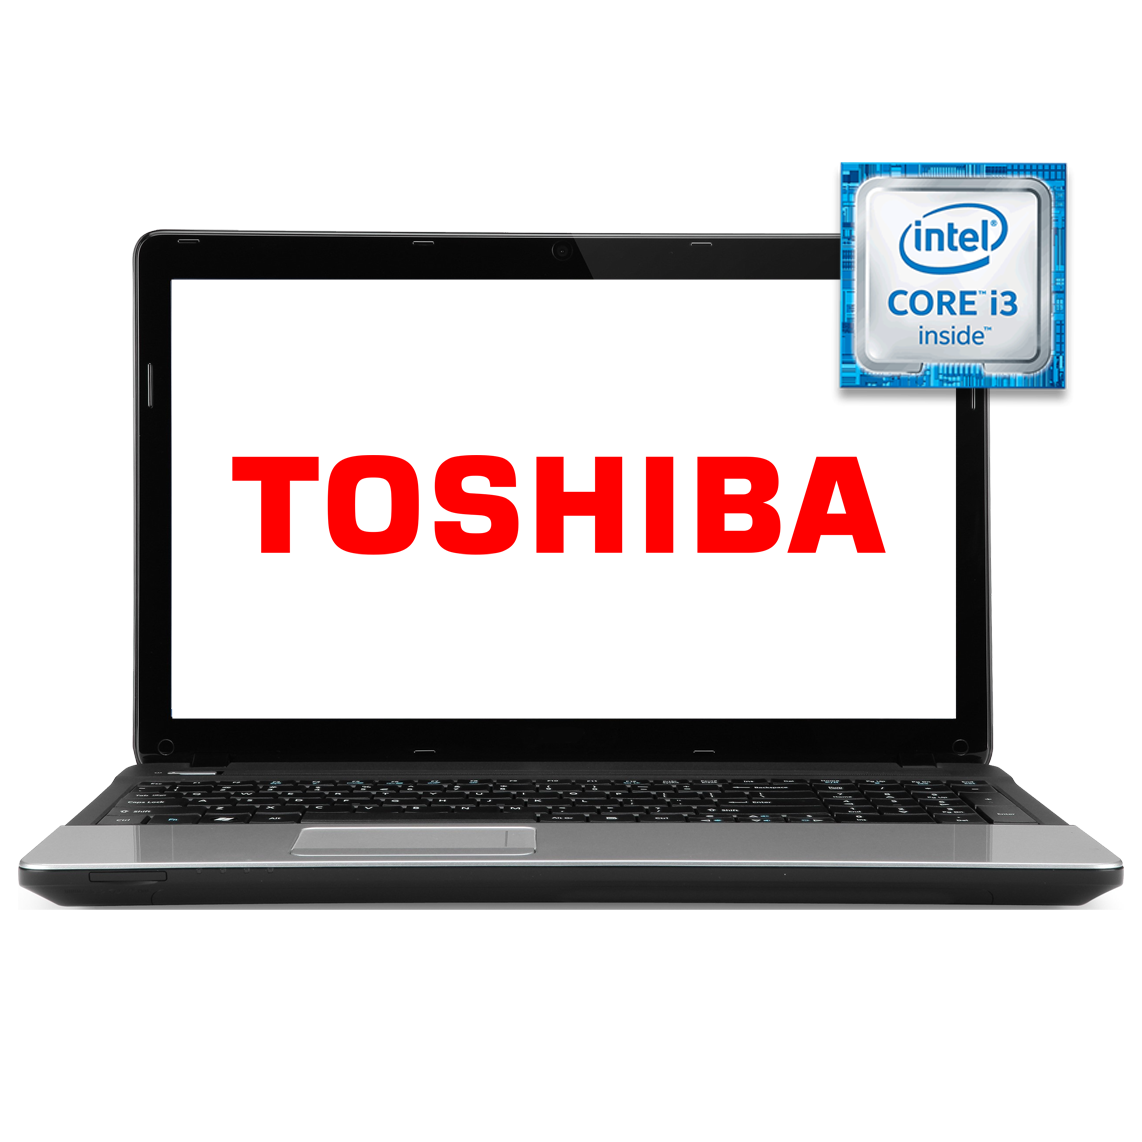 Toshiba - 13 inch Core i3 2nd Gen